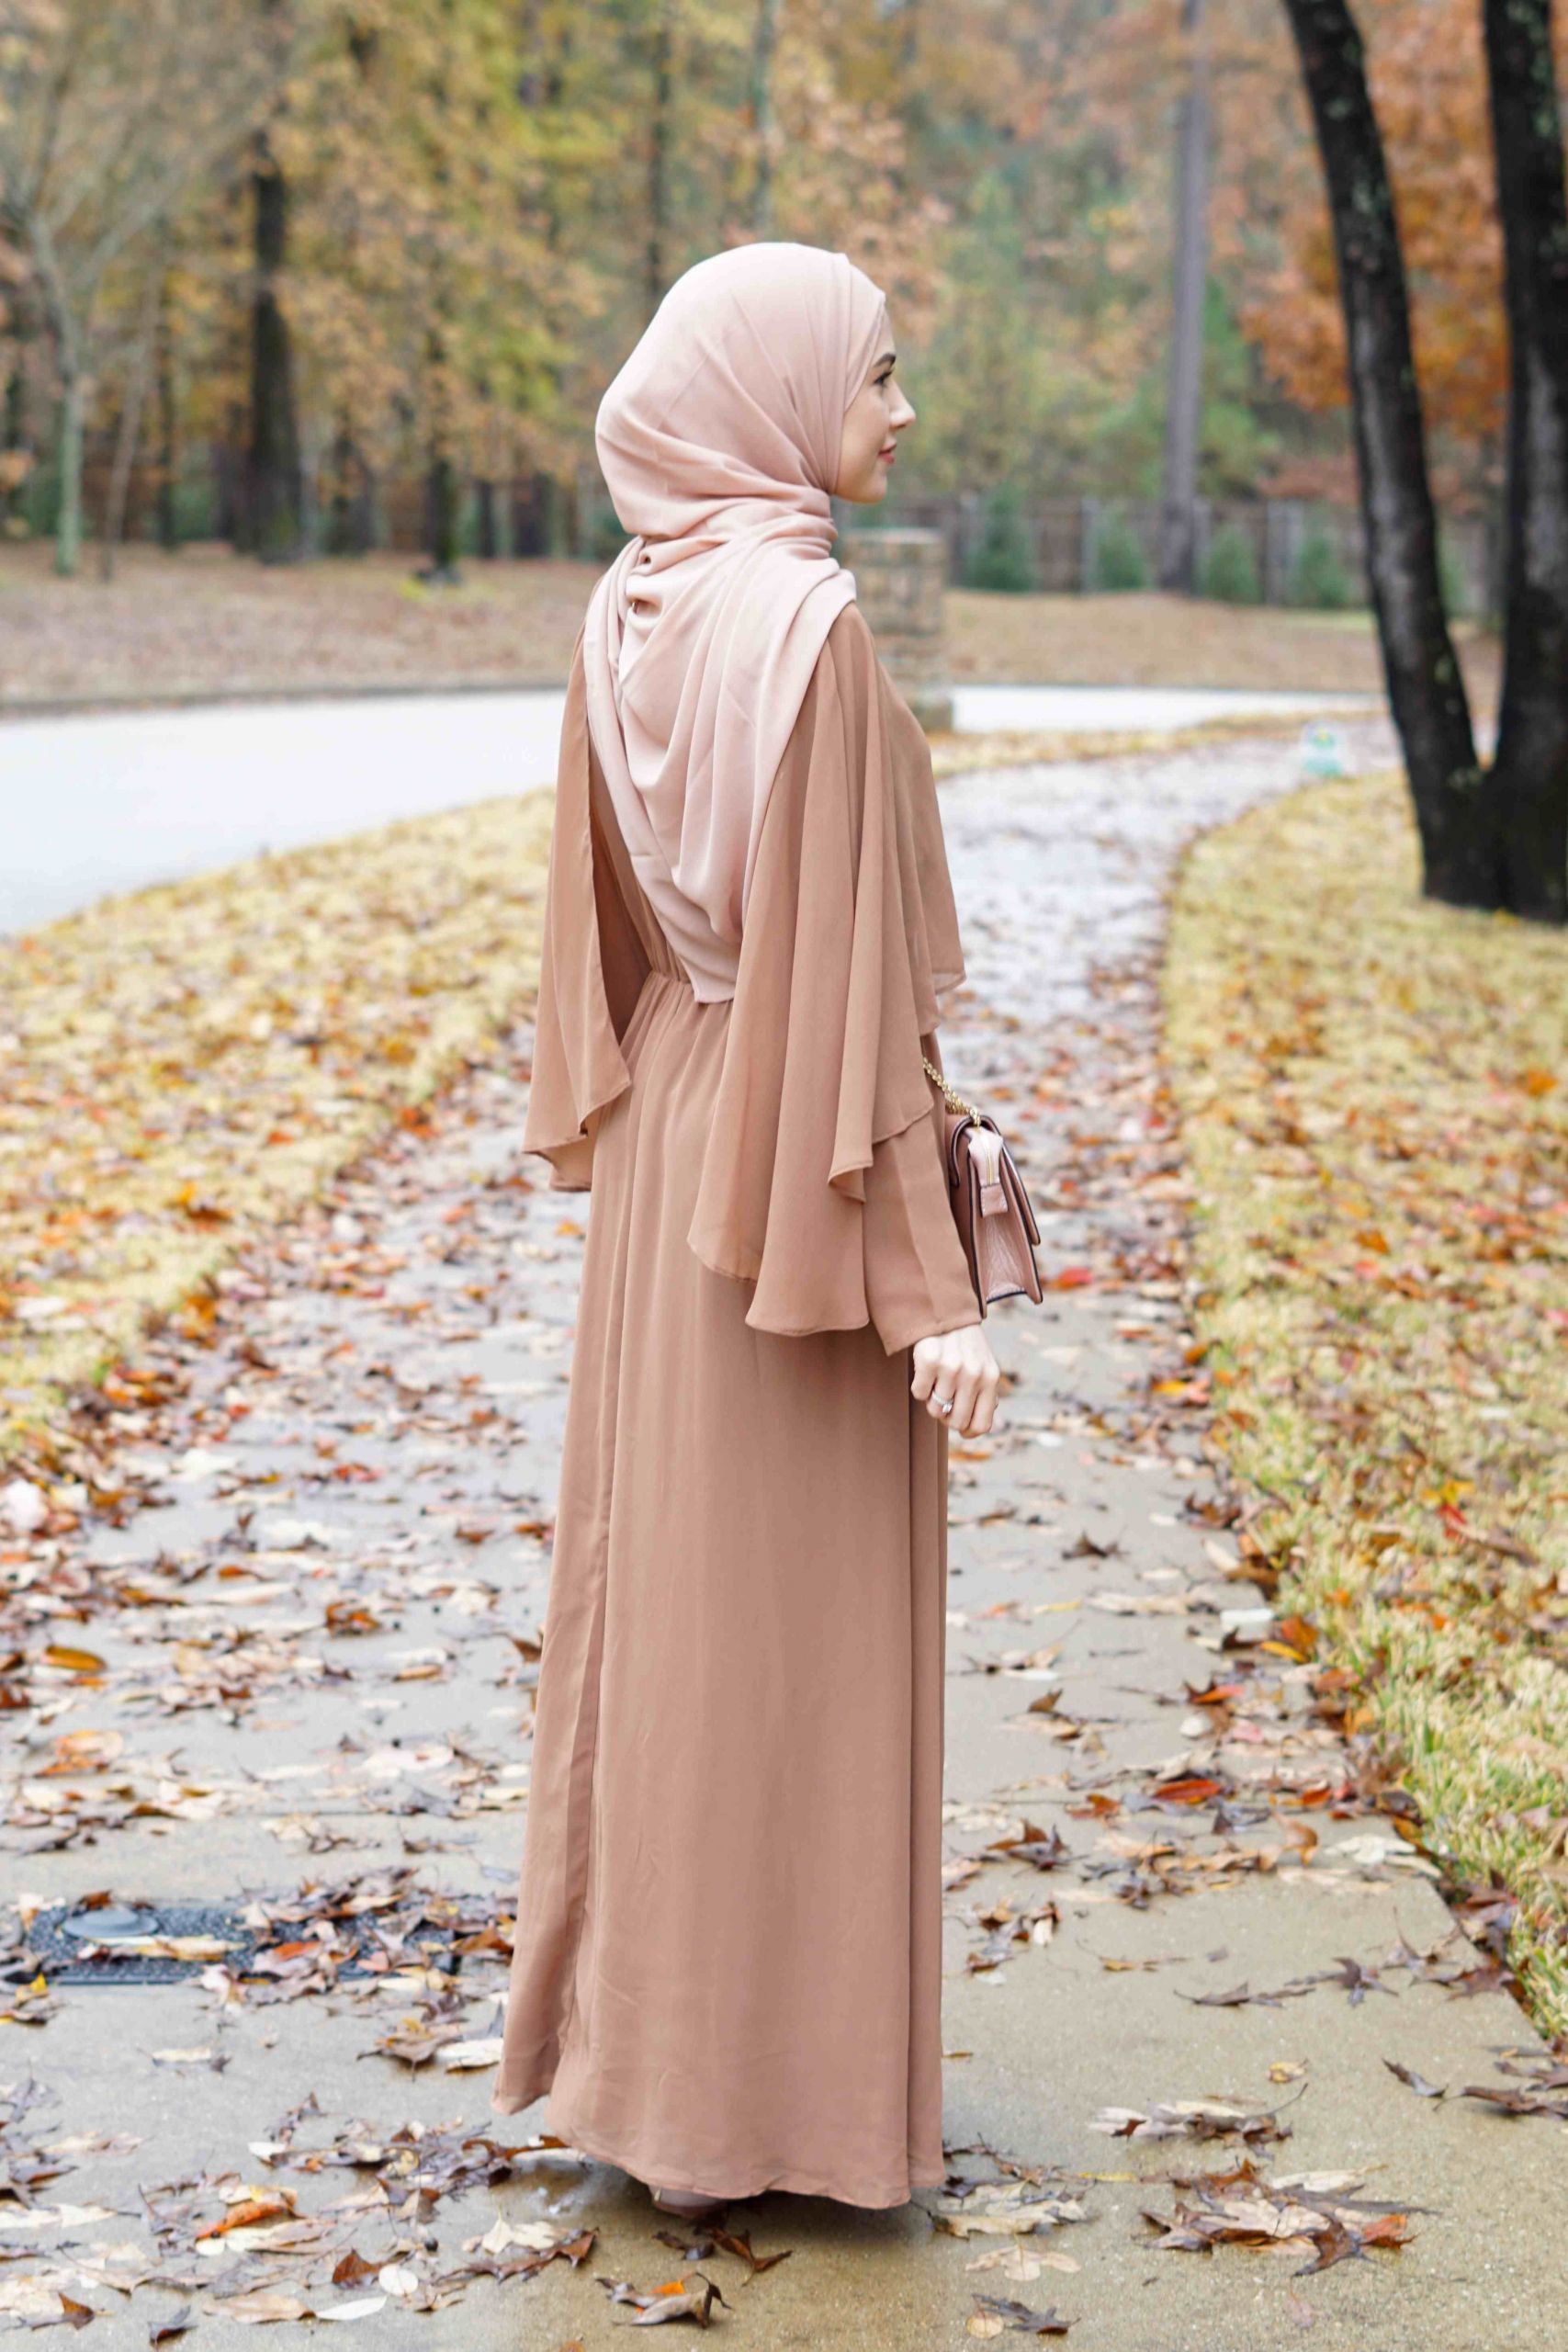 Ide Fashion Muslimah E6d5 ριитєяєѕт Inxspiration